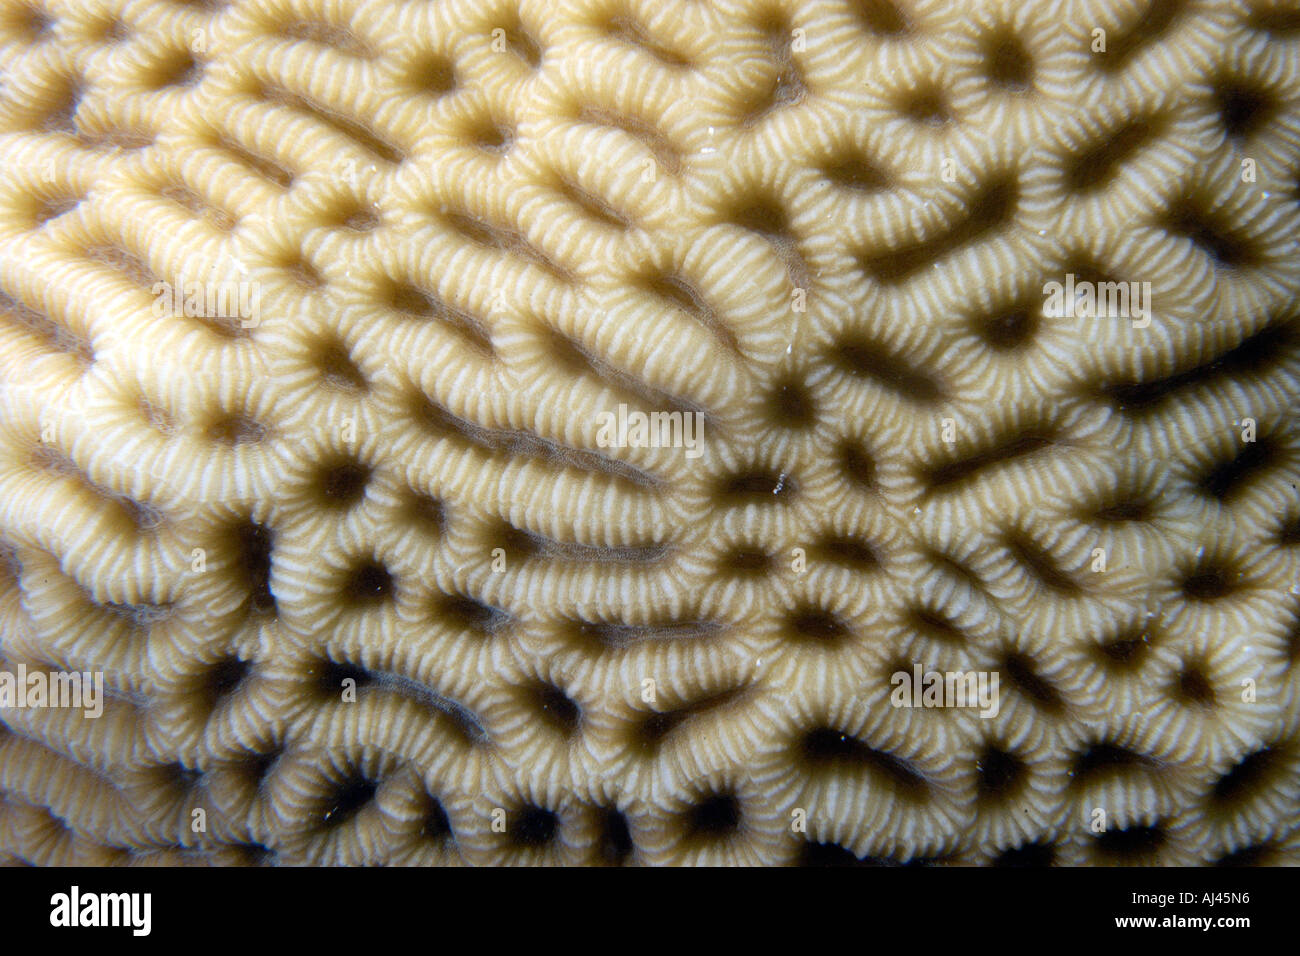 Favid coral possibly Platygyra sp Ailuk atol Marshall Islands Pacific Stock Photo